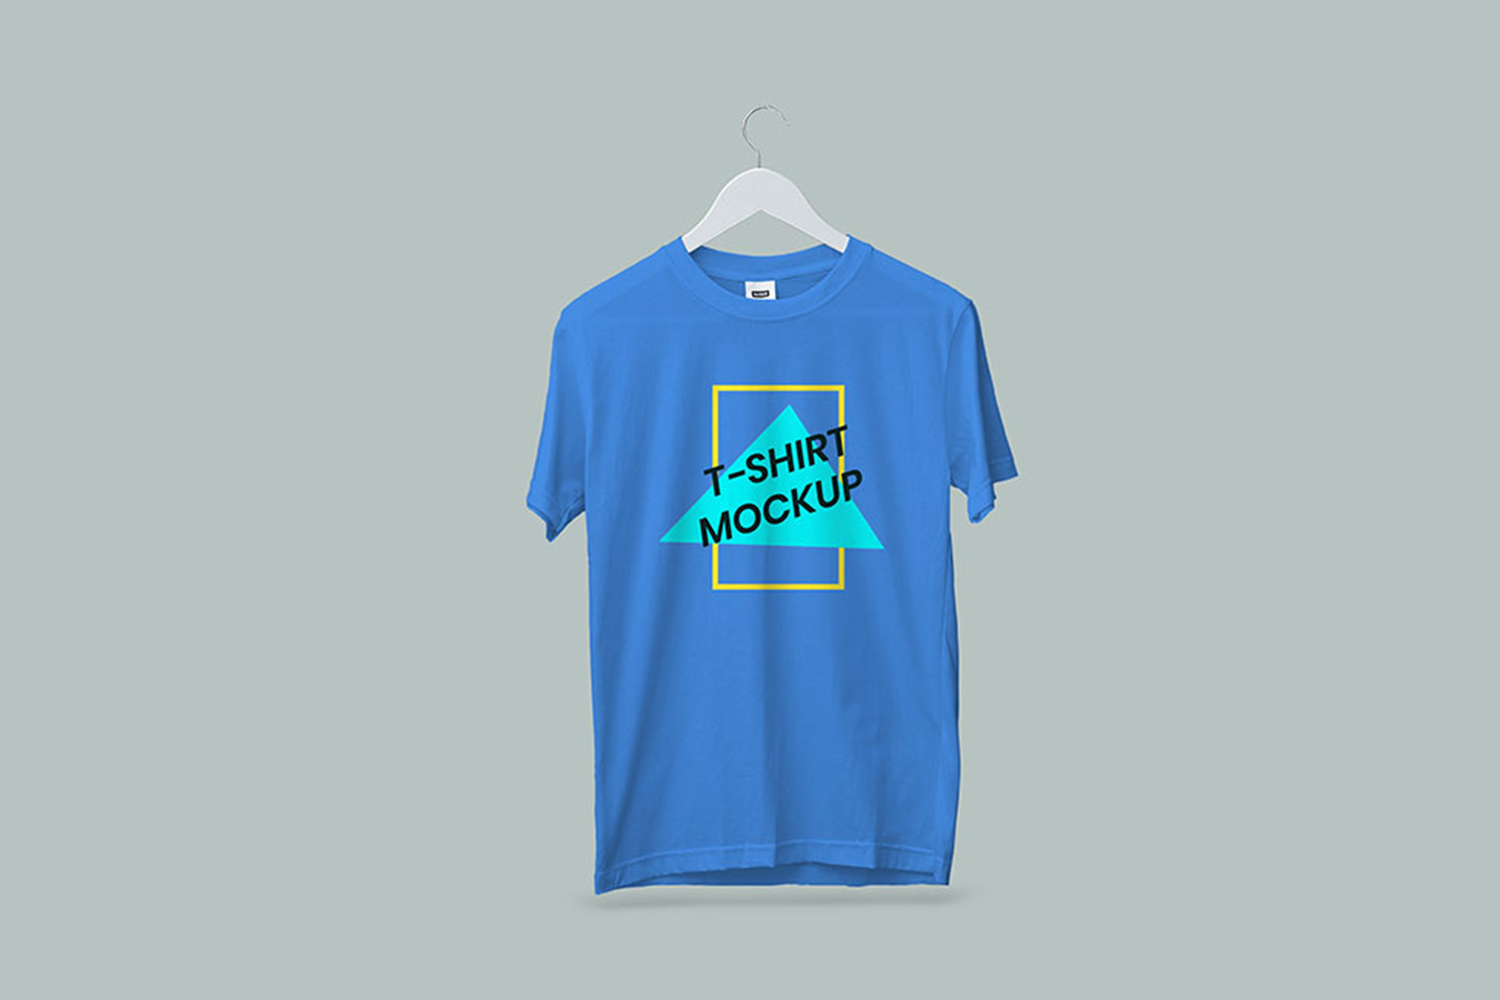 Short Sleeves Hanging T-Shirt Mockup Free Download